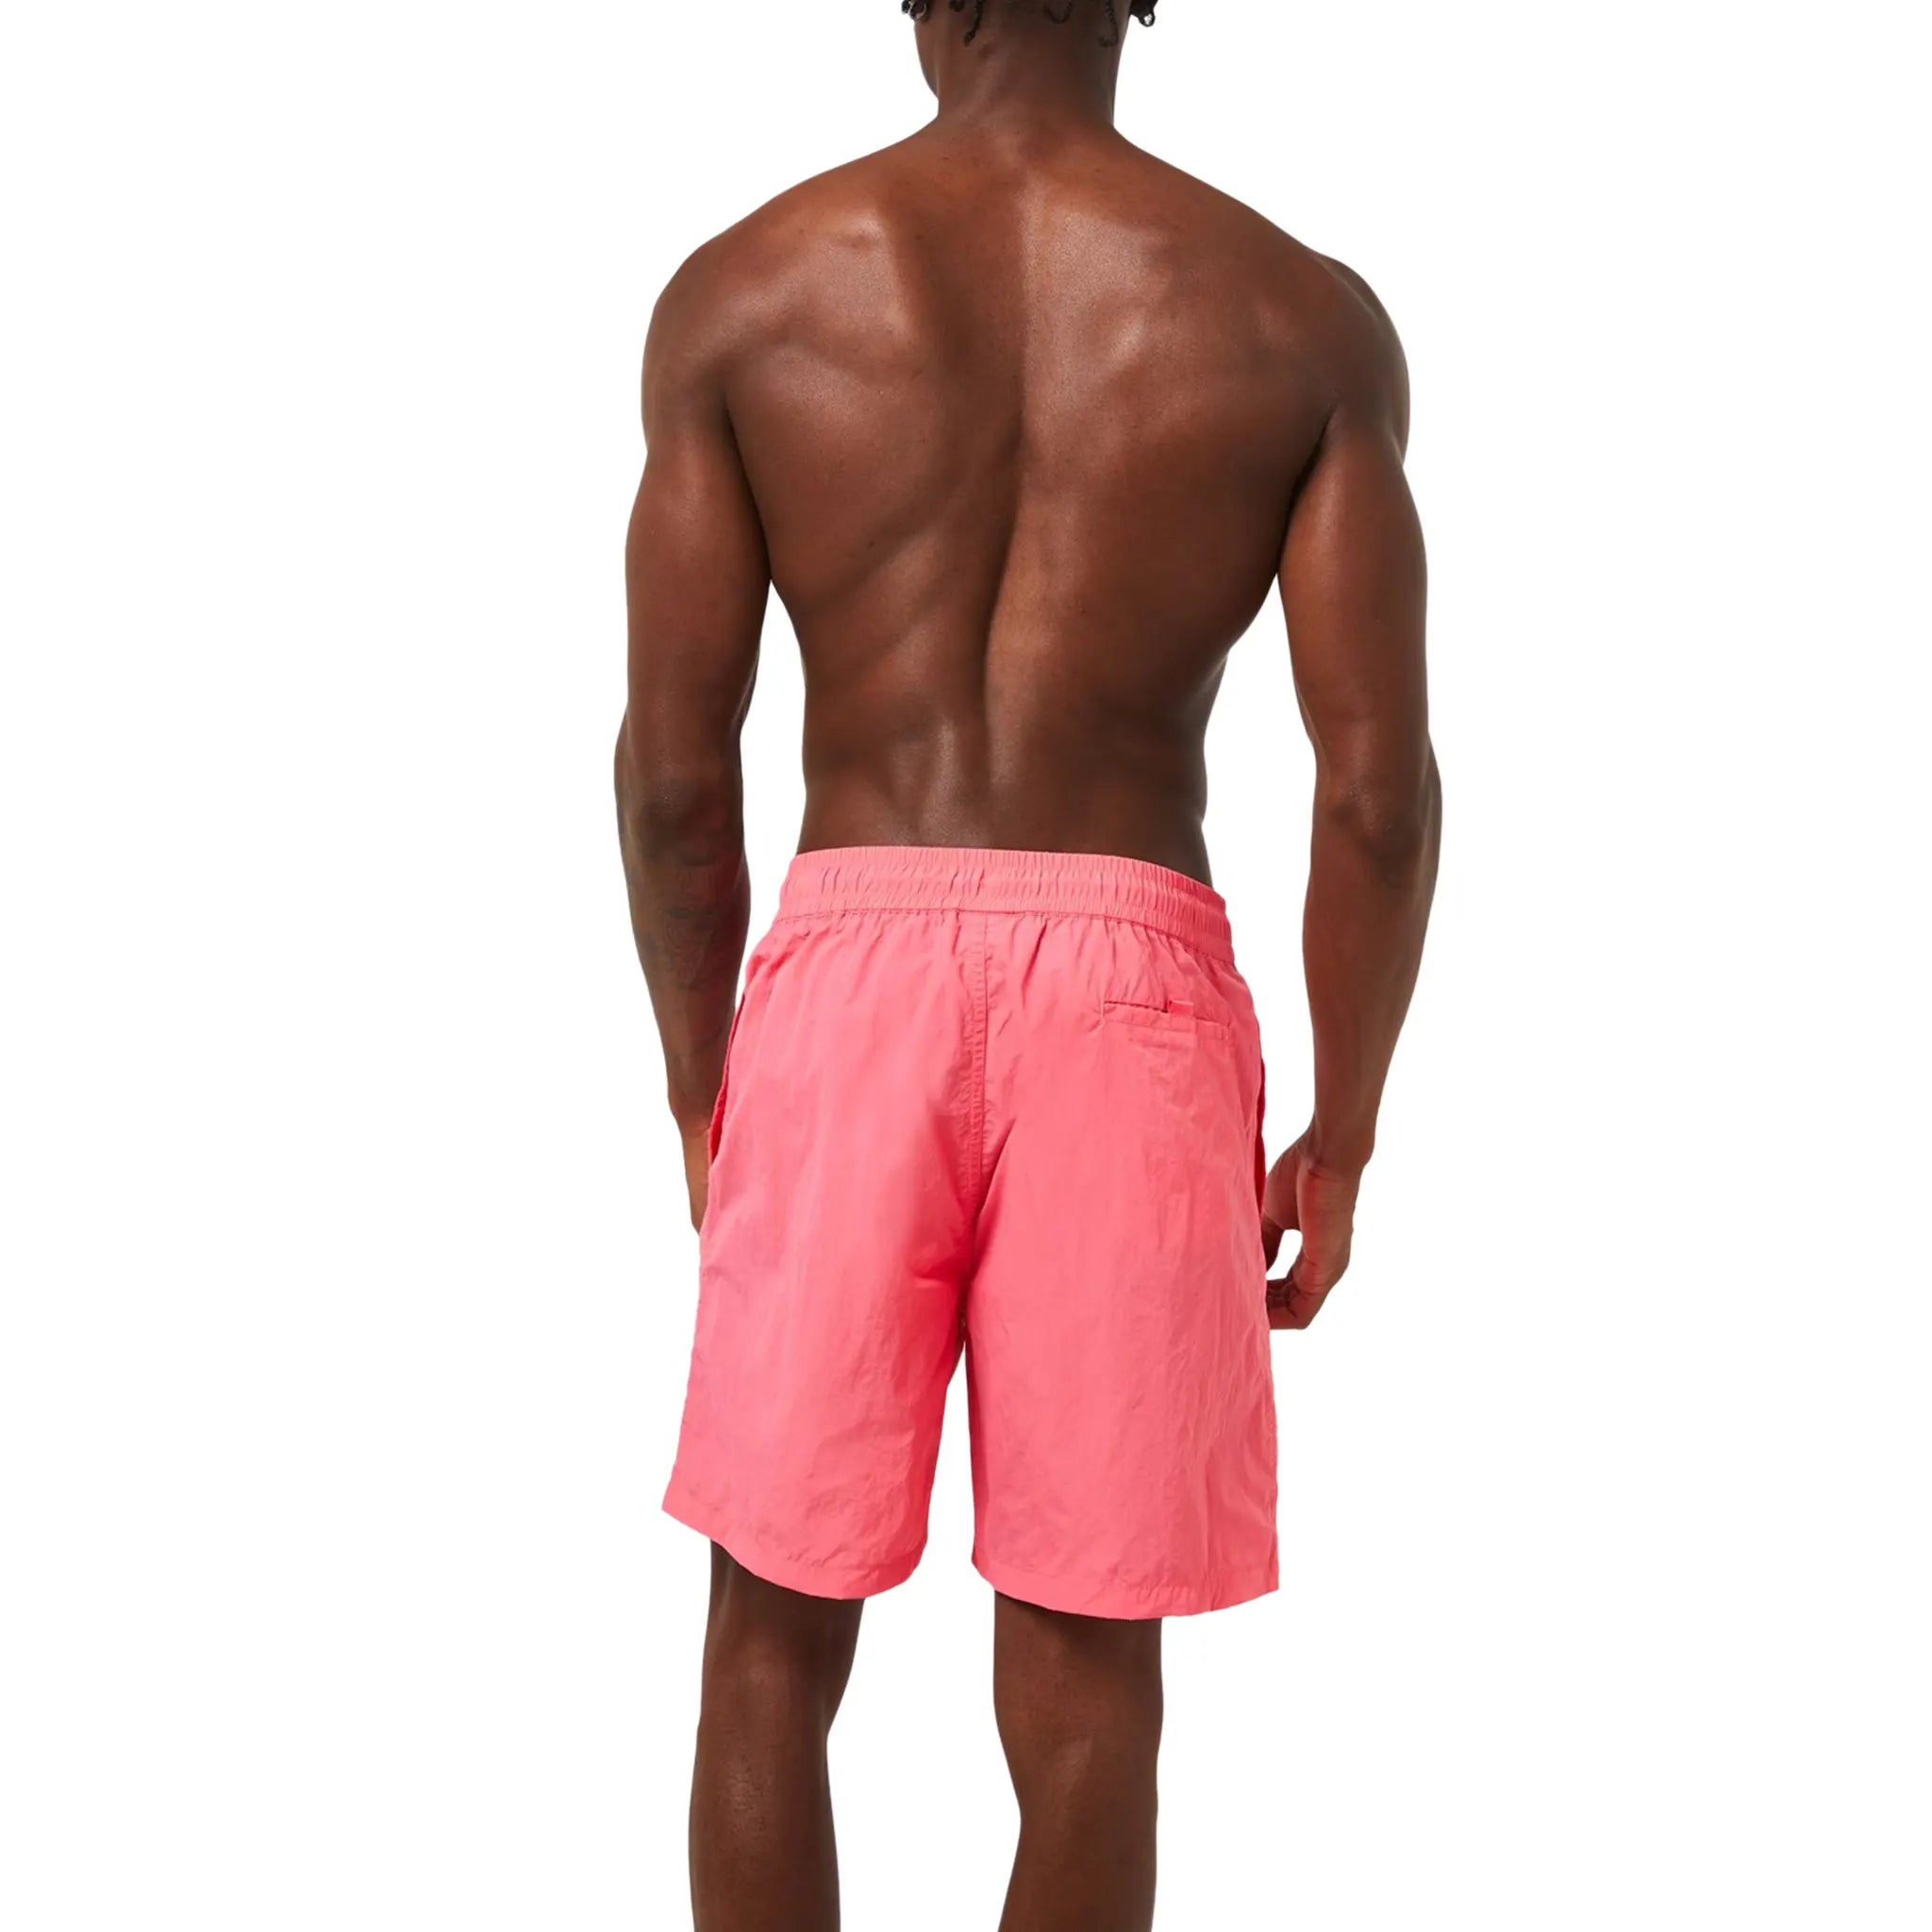 Back Detail view of Icecream IC Run Dog Pink Swim Shorts ic23214-pnk